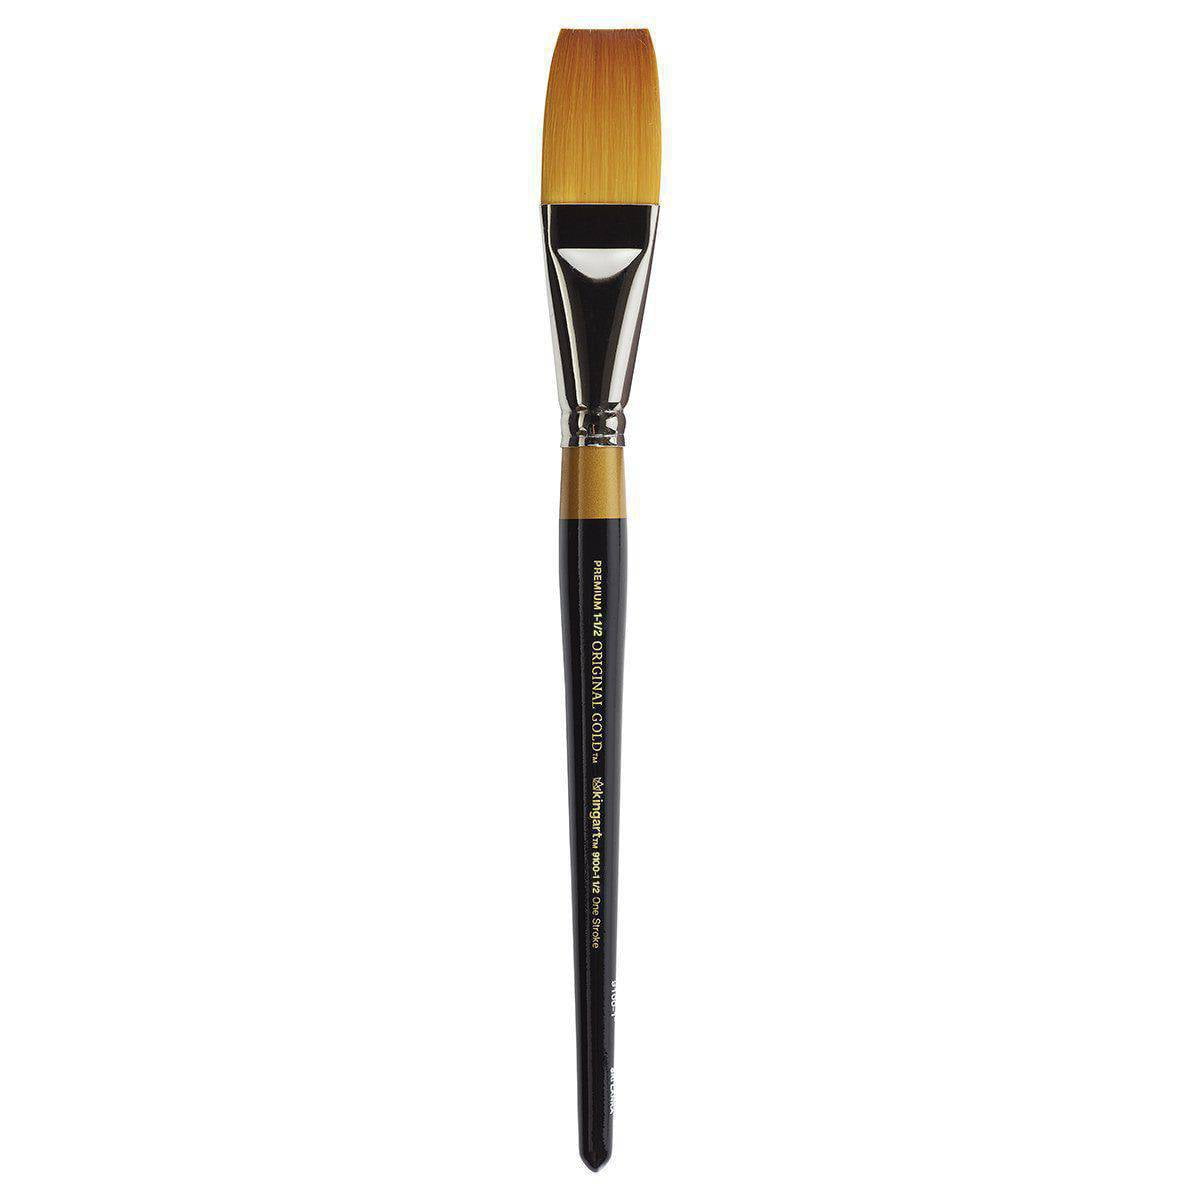 Kingart Original Gold Specialty 9247 Series, Crescent Filbert Blender Artist Brush, Golden Taklon & White Bristle Blend, Acrylic Handle (1/8)